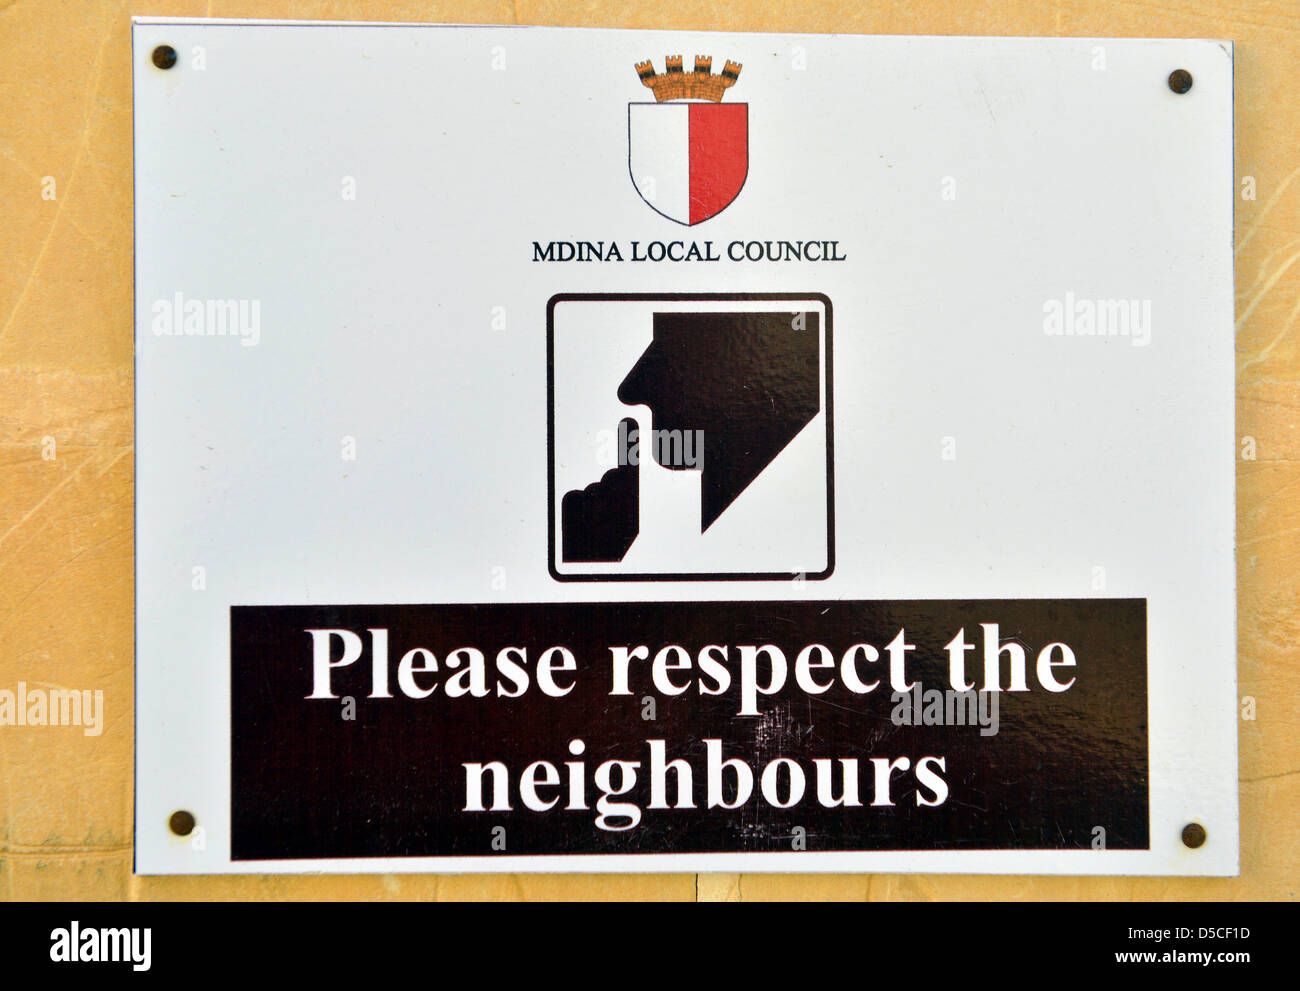 Quiet please respect the neighbours sign, Mdina, Malta. Stock Photo